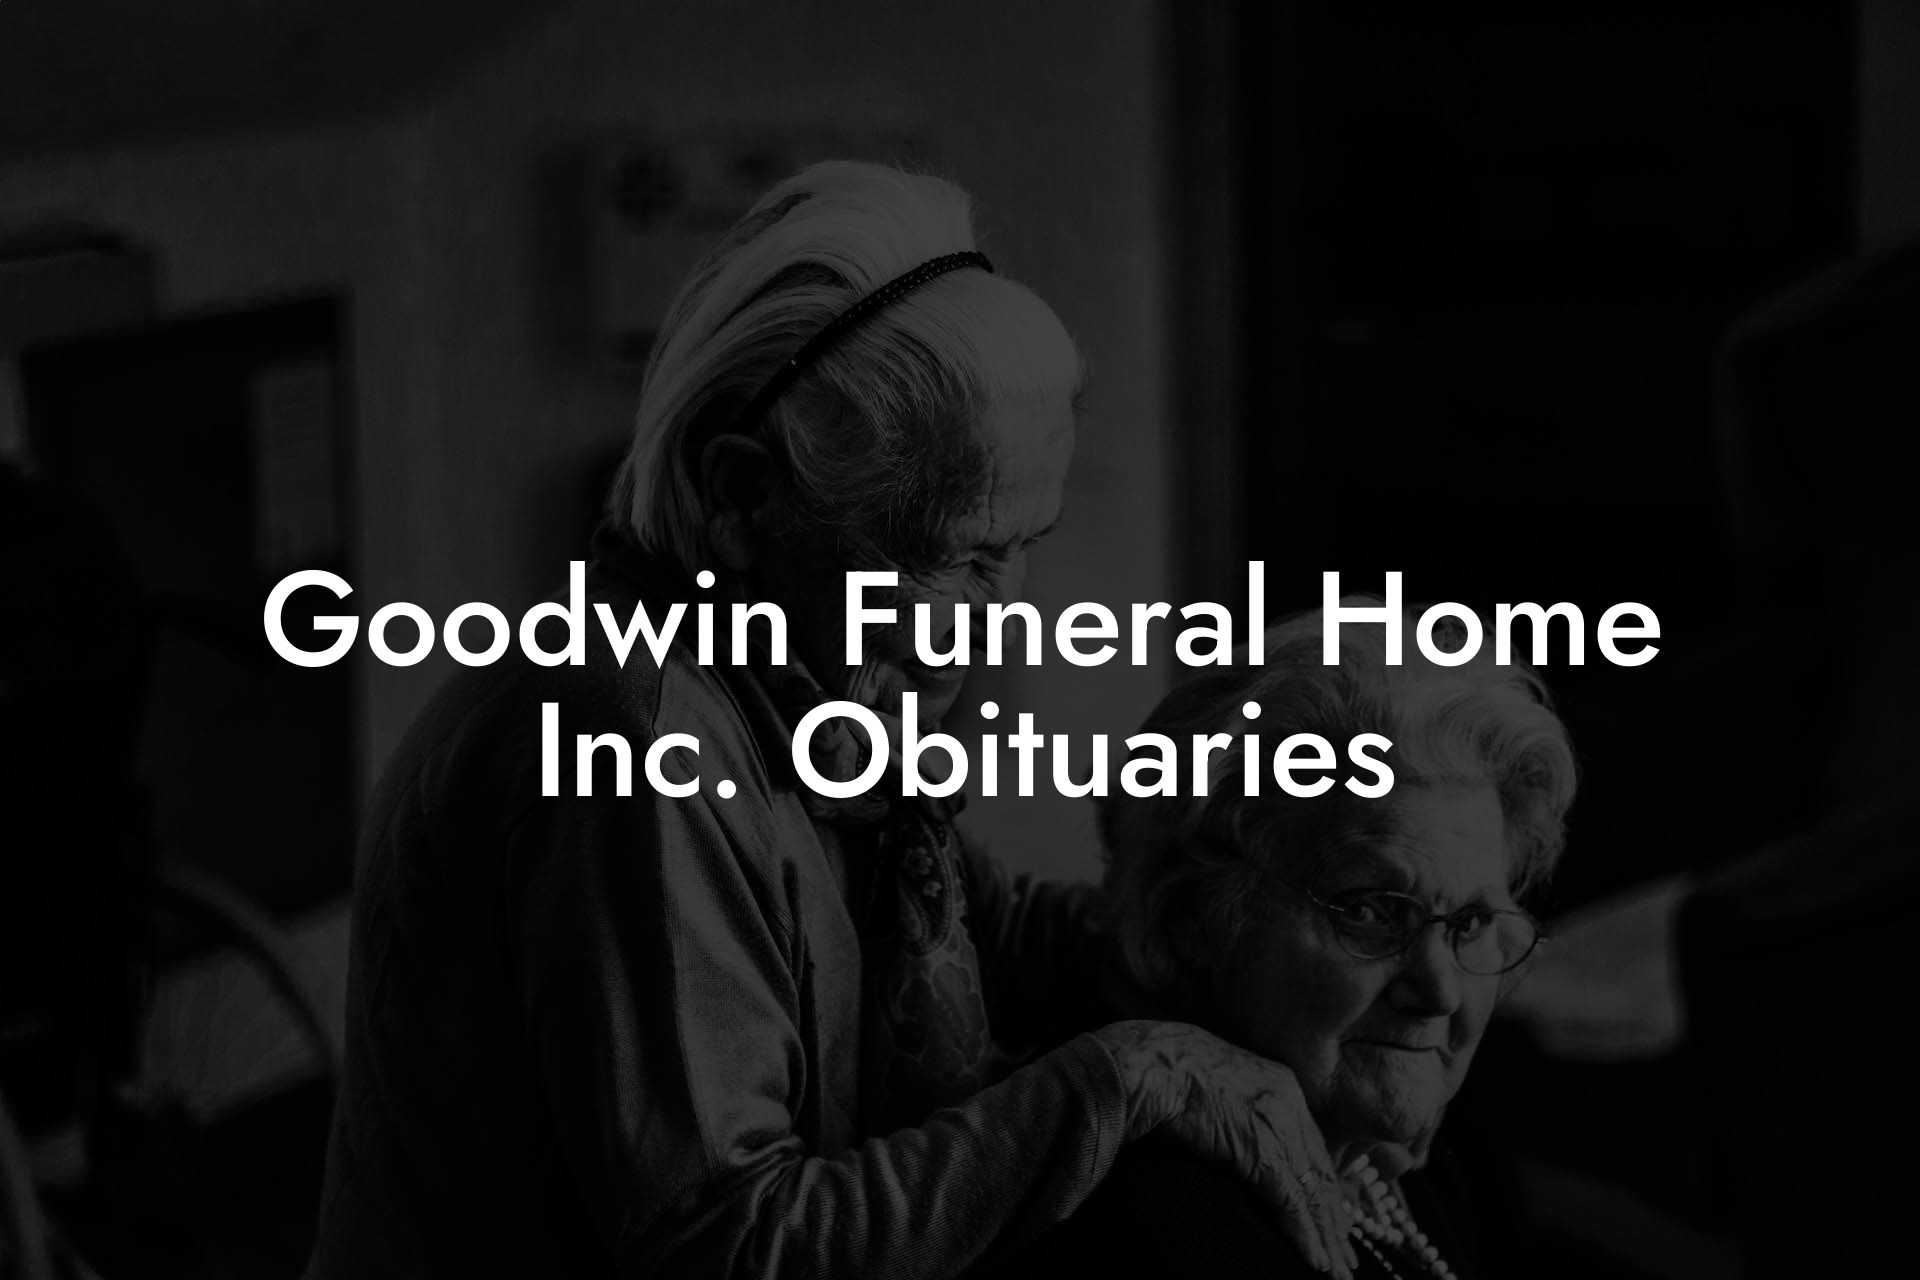 Goodwin Funeral Home Inc. Obituaries